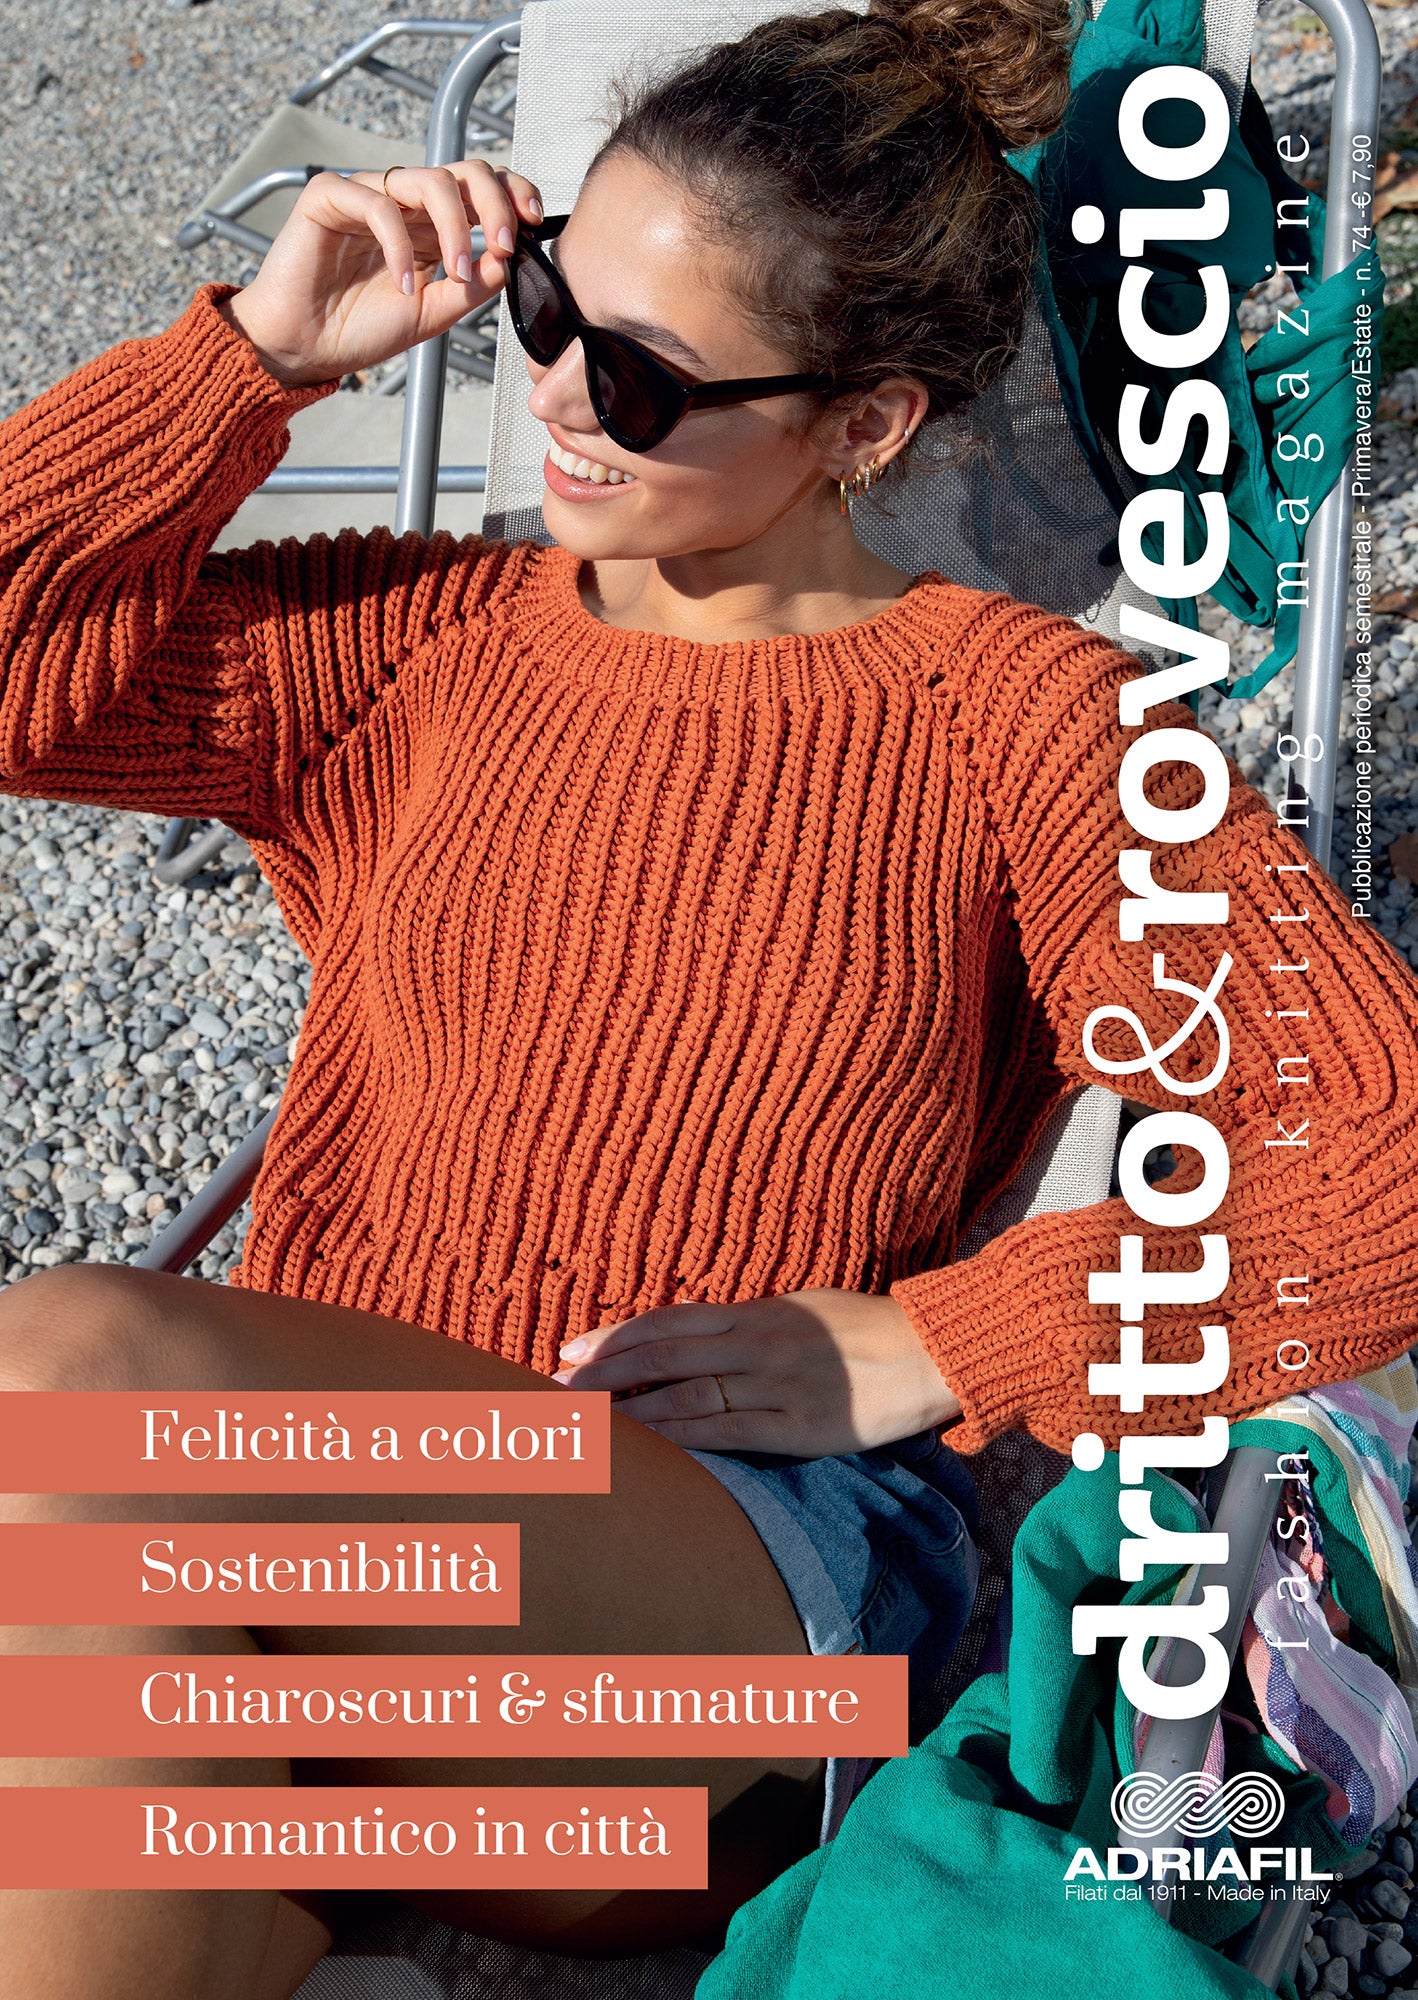 Adriafil Dritto & Rovescio Knitting Magazine No.74 (Spring/Summer)